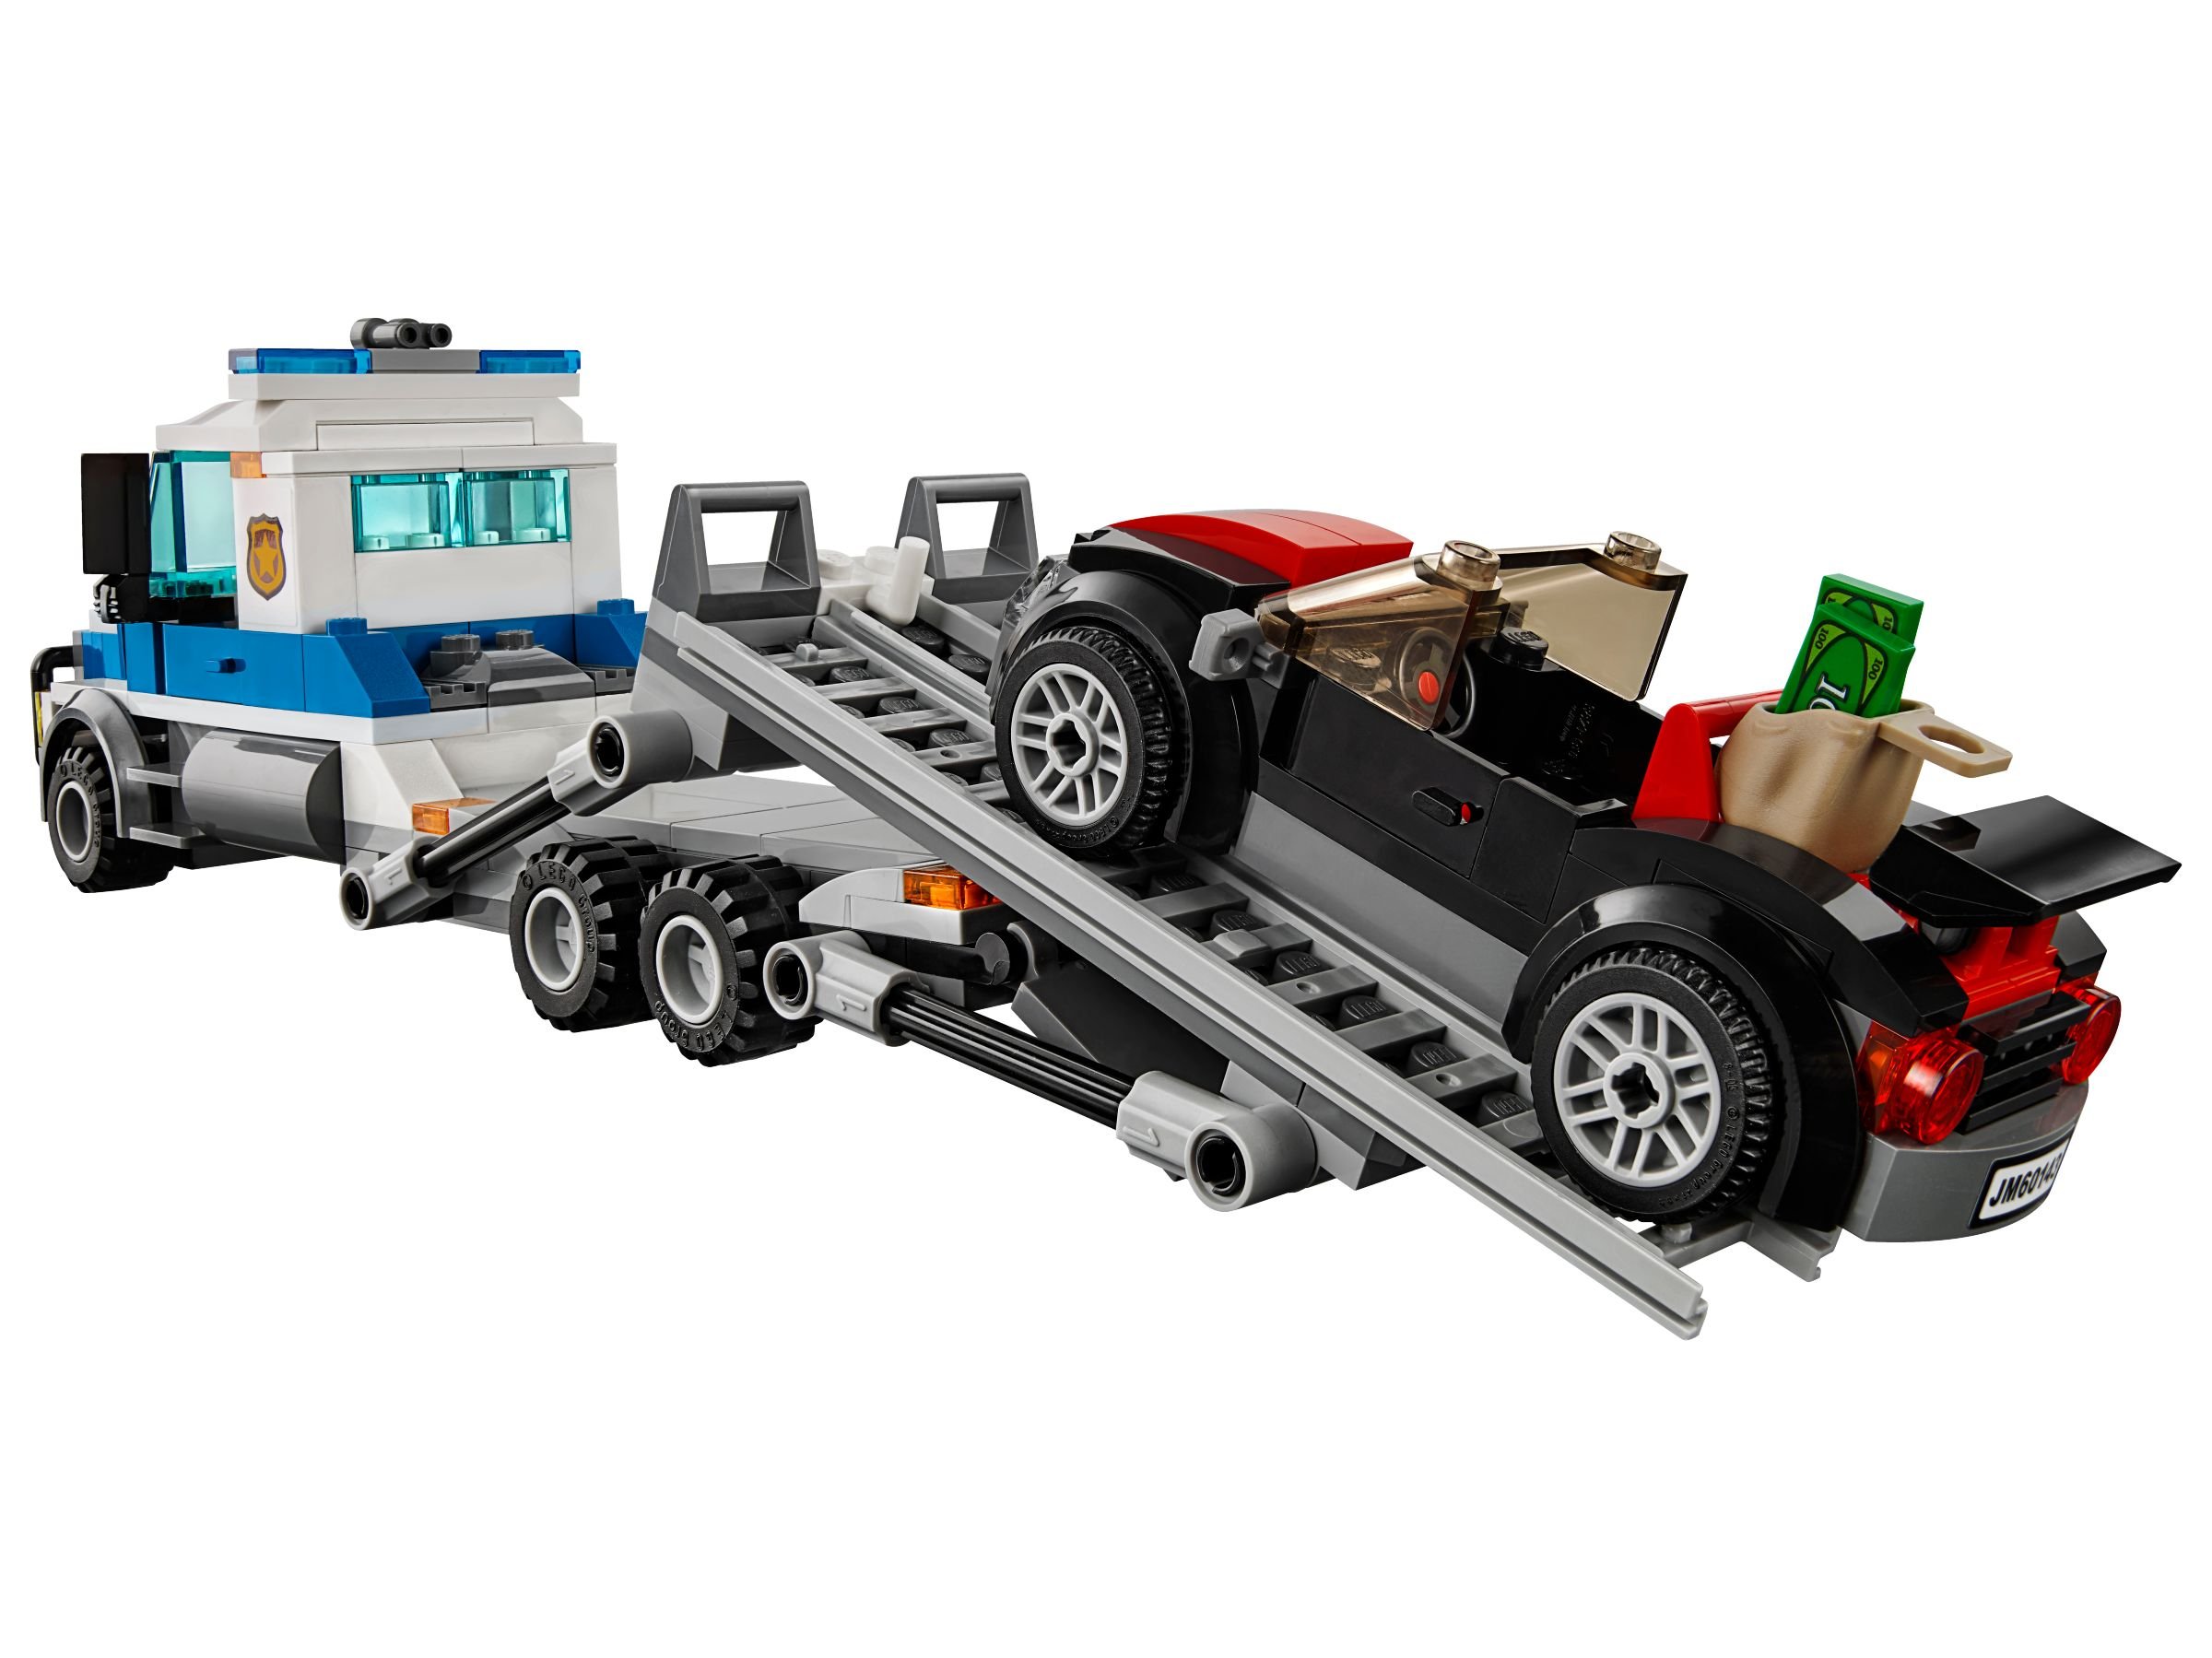 LEGO City 60143 Überfall auf Autotransporter LEGO_60143_alt3.jpg